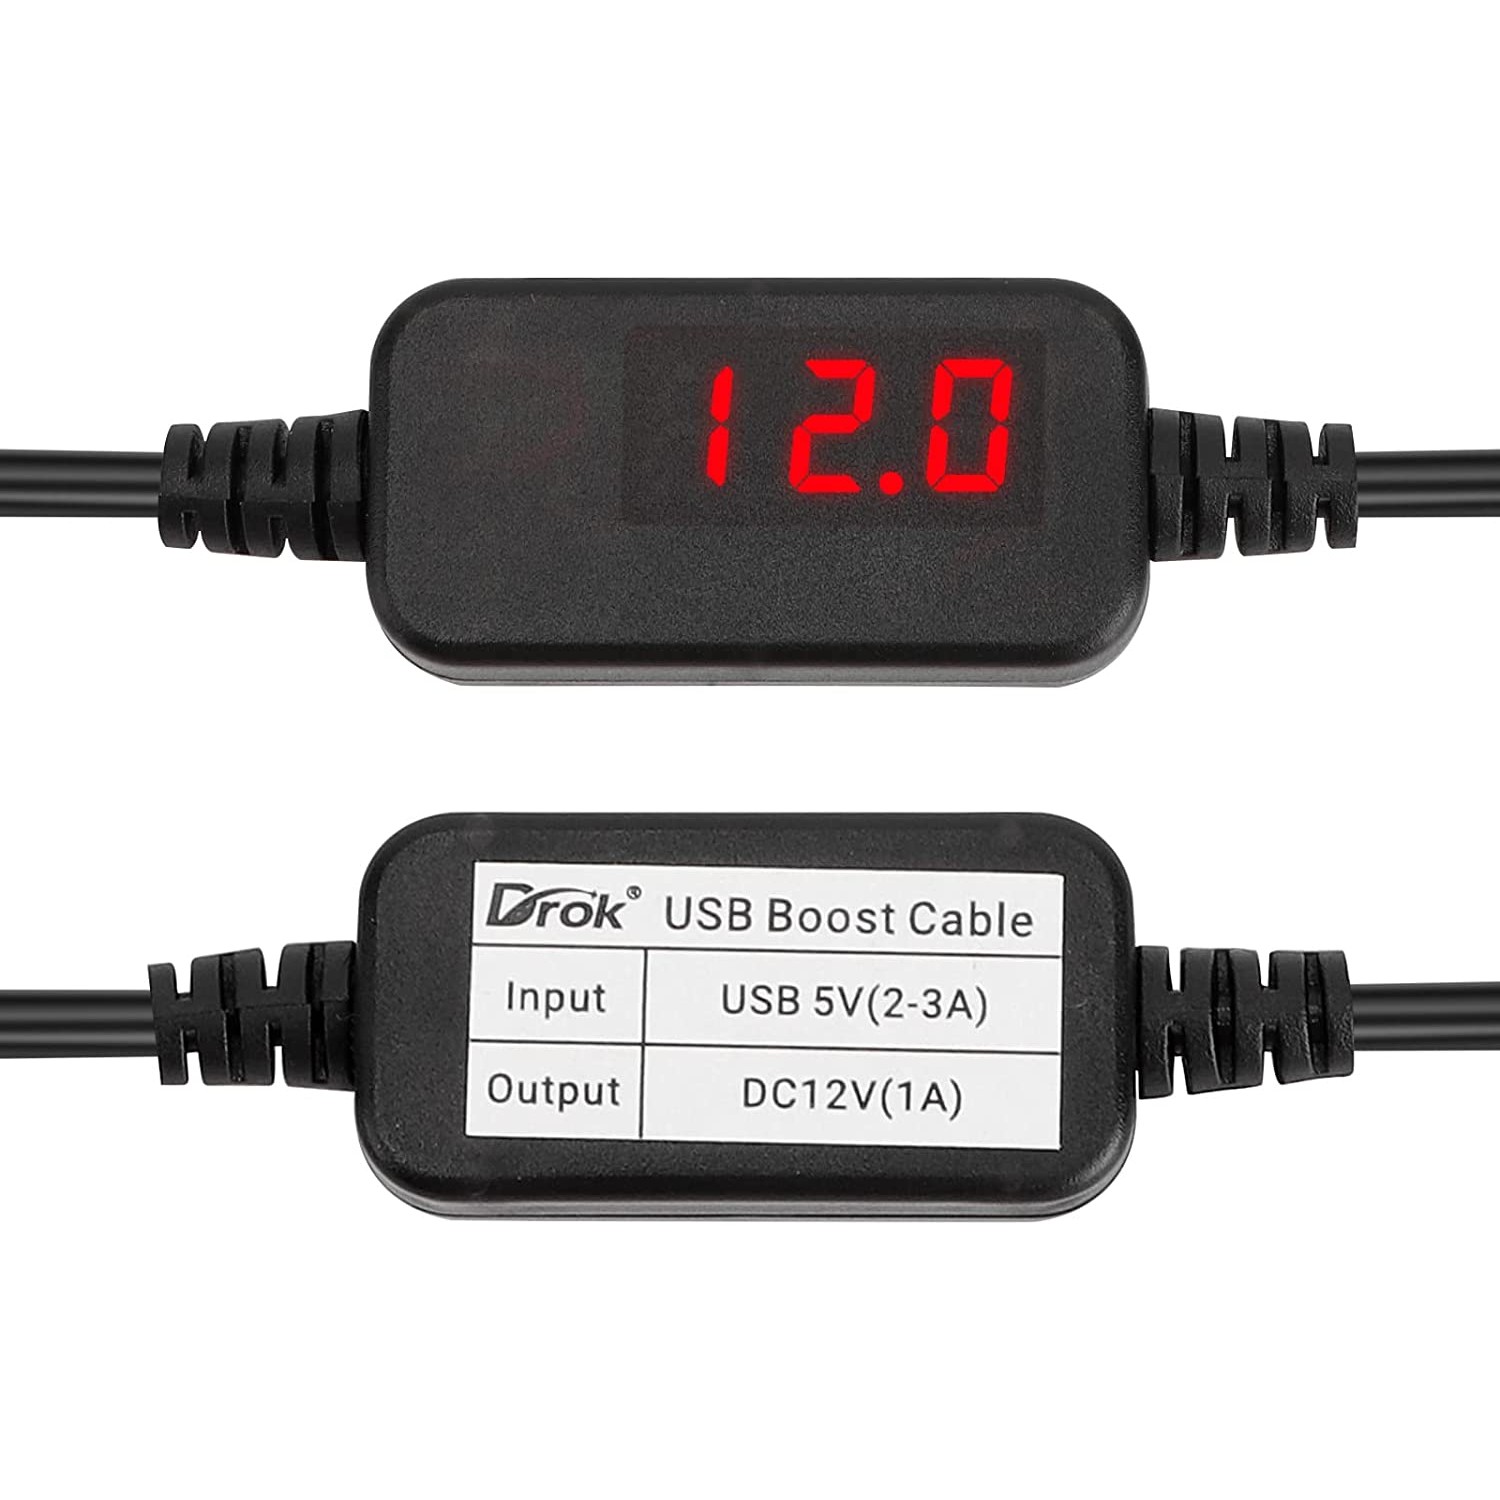 USB to 12v, DROK 5v to 12v USB Boost Converter, USB Cable DC 5v